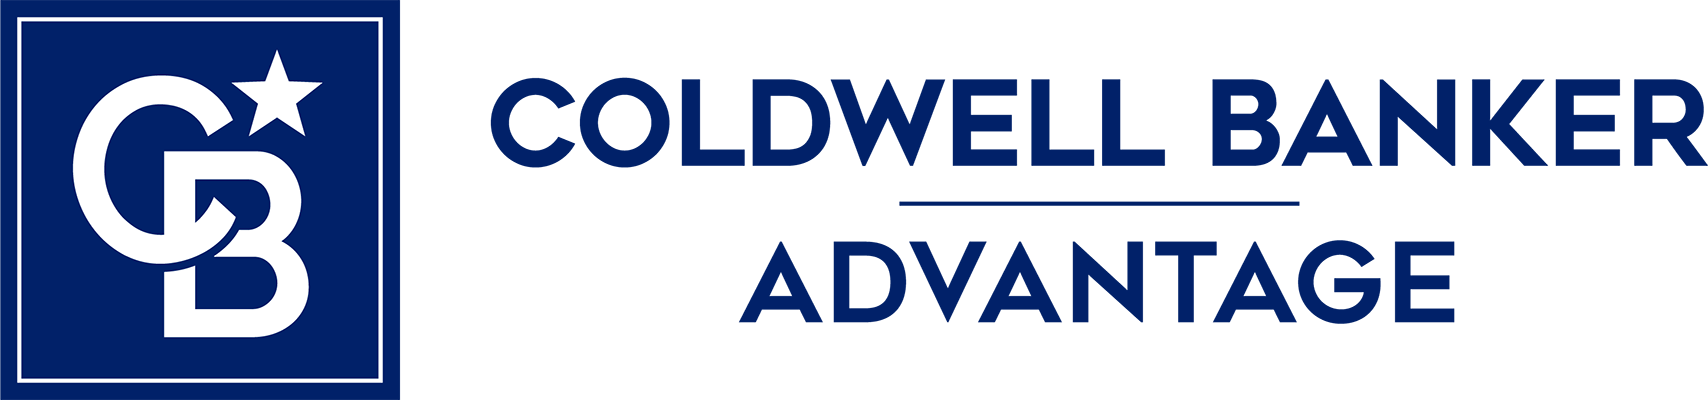 Casey House - Coldwell Banker Advantage Logo